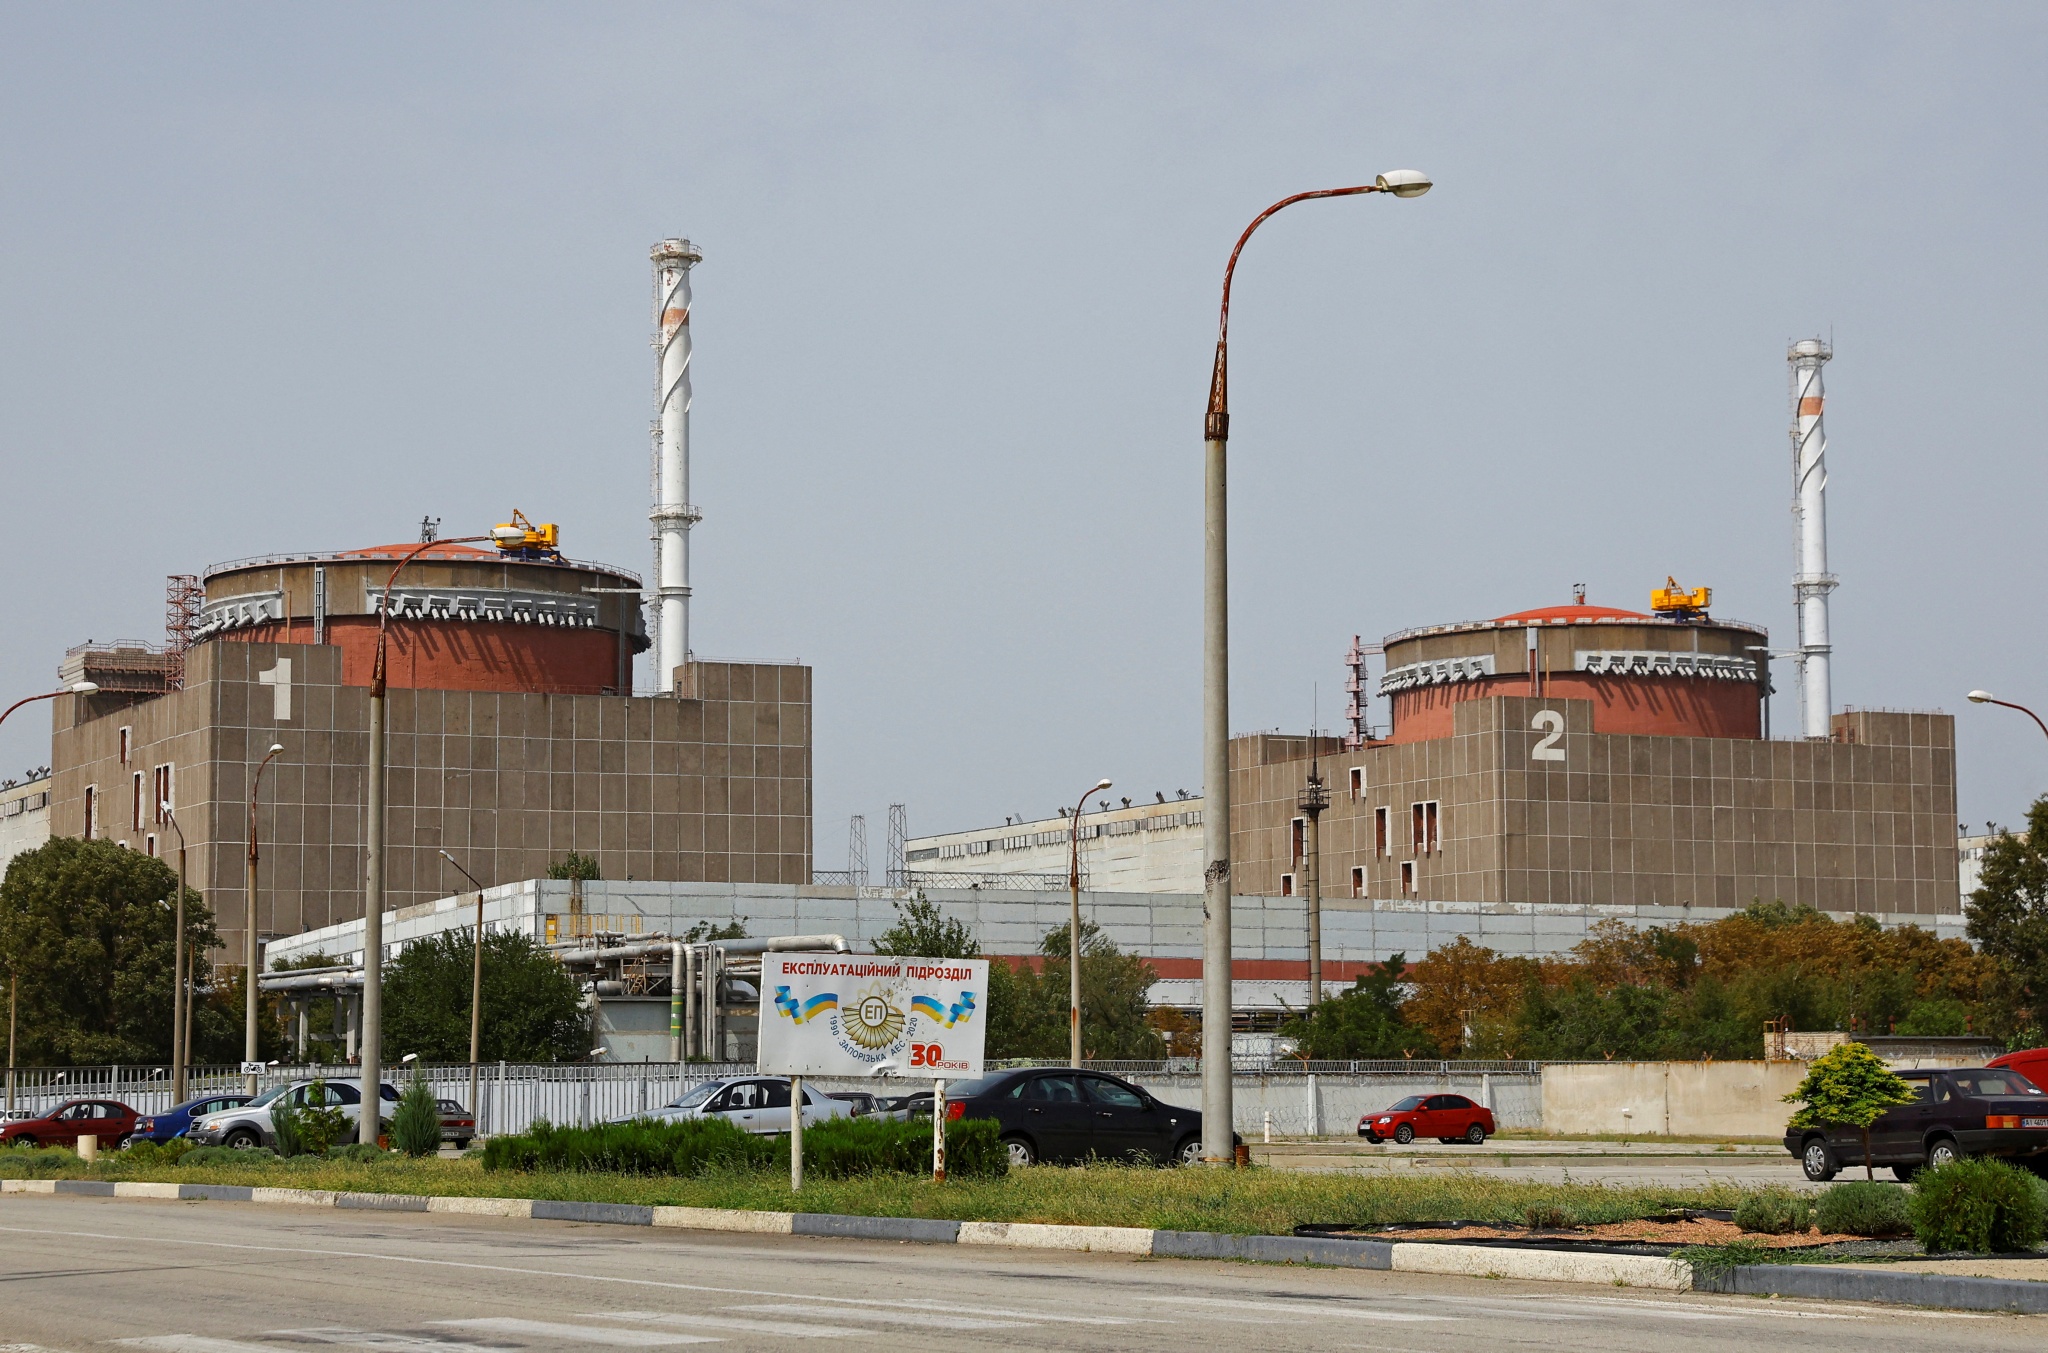 Ukraine war: Zaporizhzhia nuclear power plant "at risk" of disaster